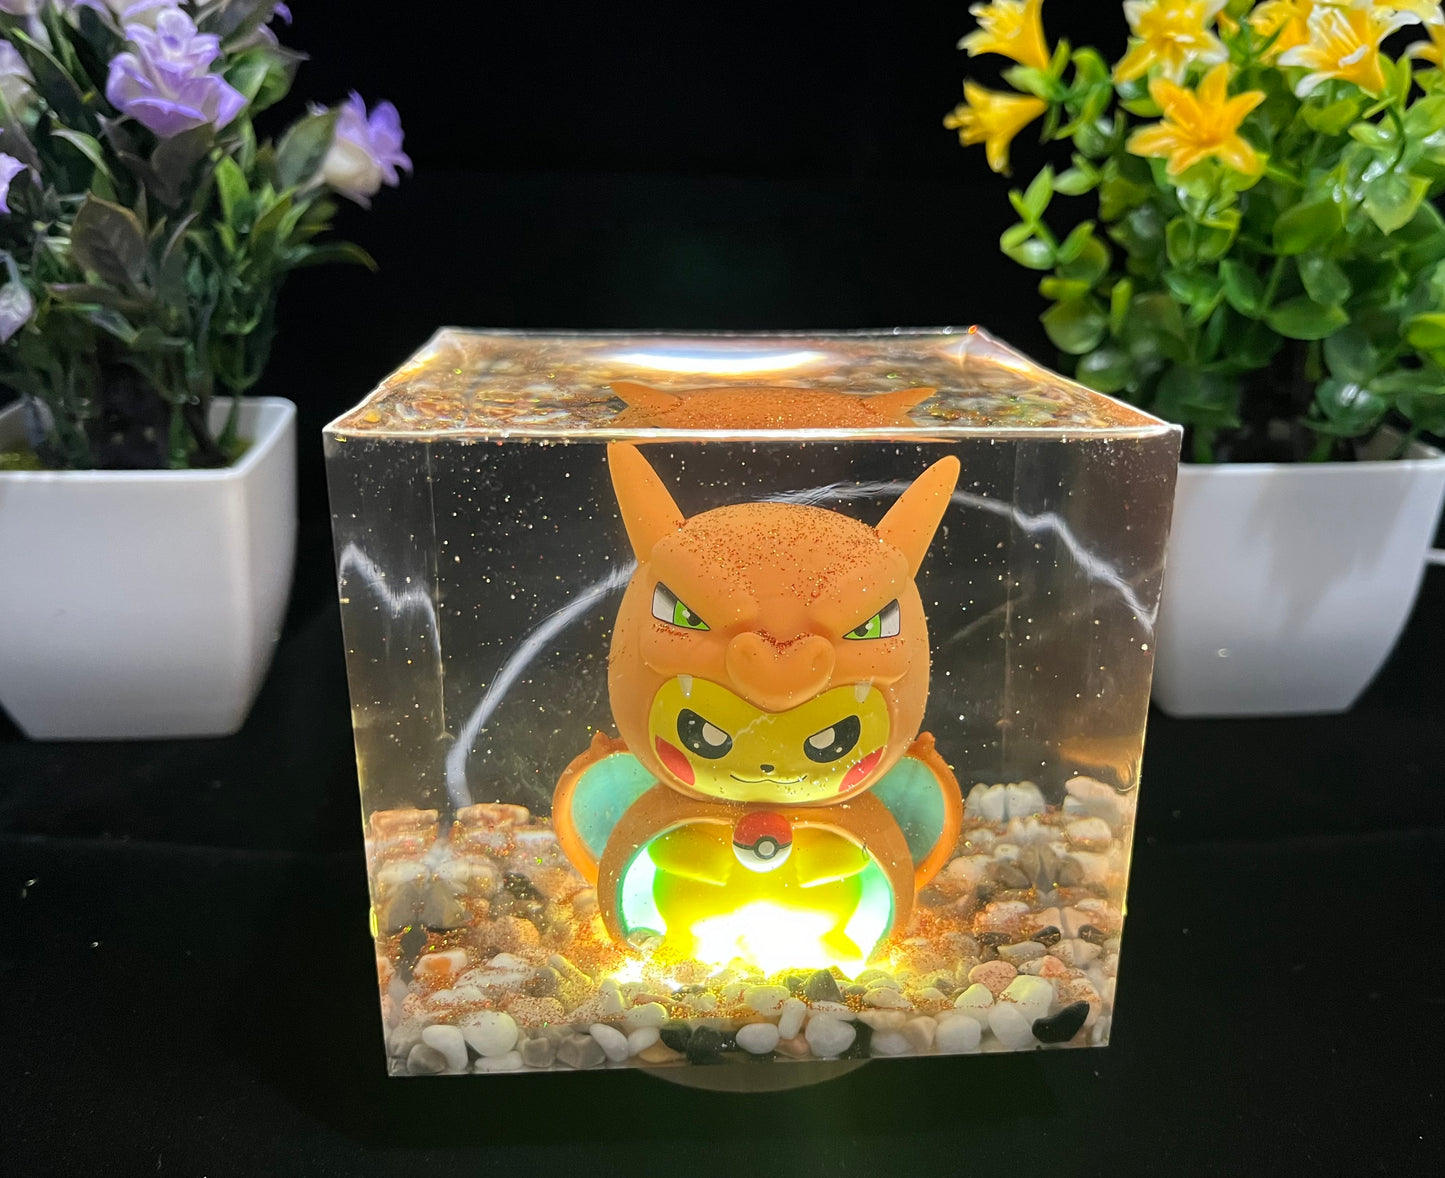 Pikachu Poncho Mix Pokemon Custom Gift - Resin Night Light, Handmade Gift Made in U.S. Home Art Decor